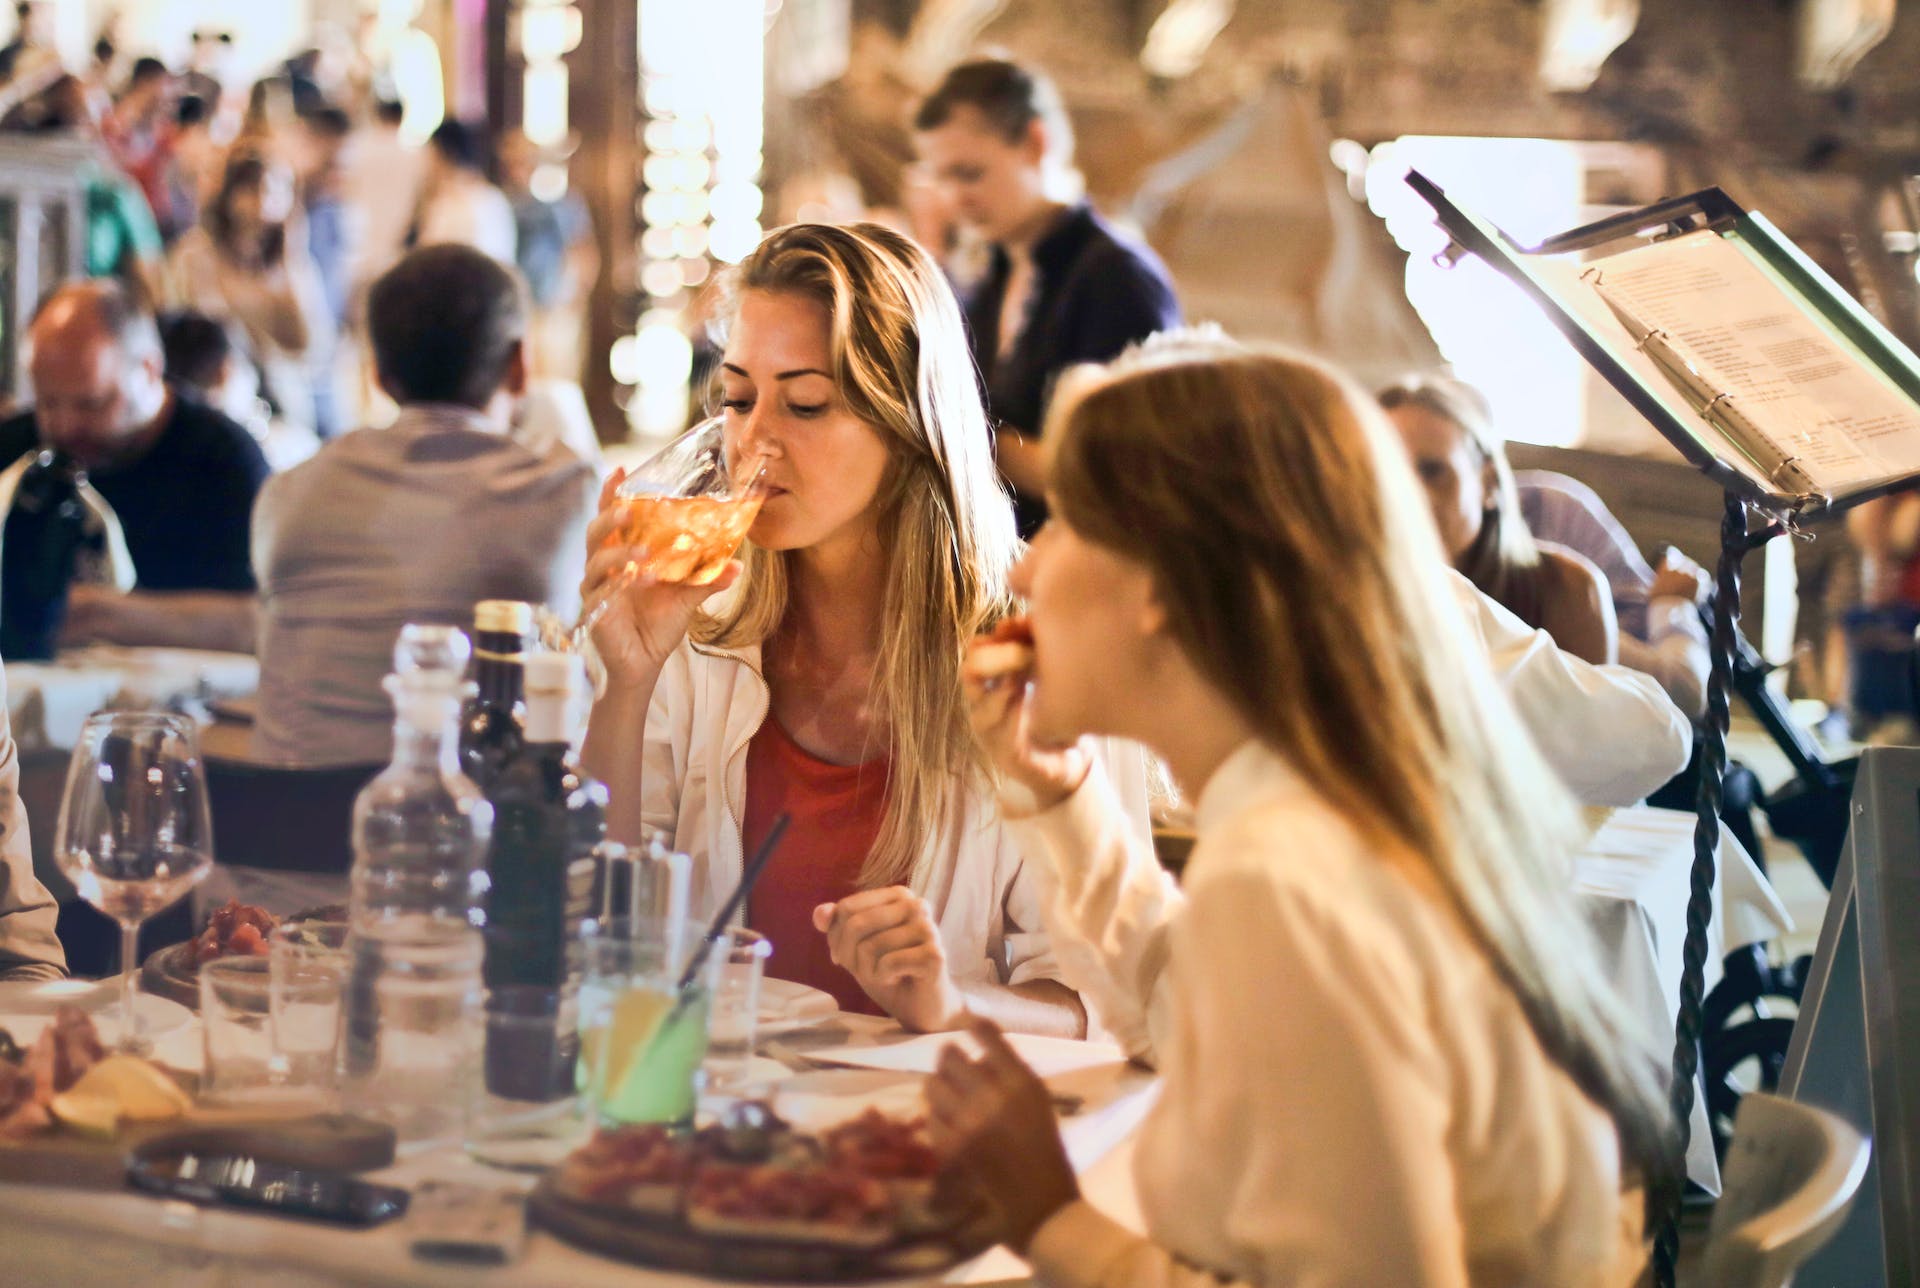 Women eating food in a restaurant | Source: Pexels